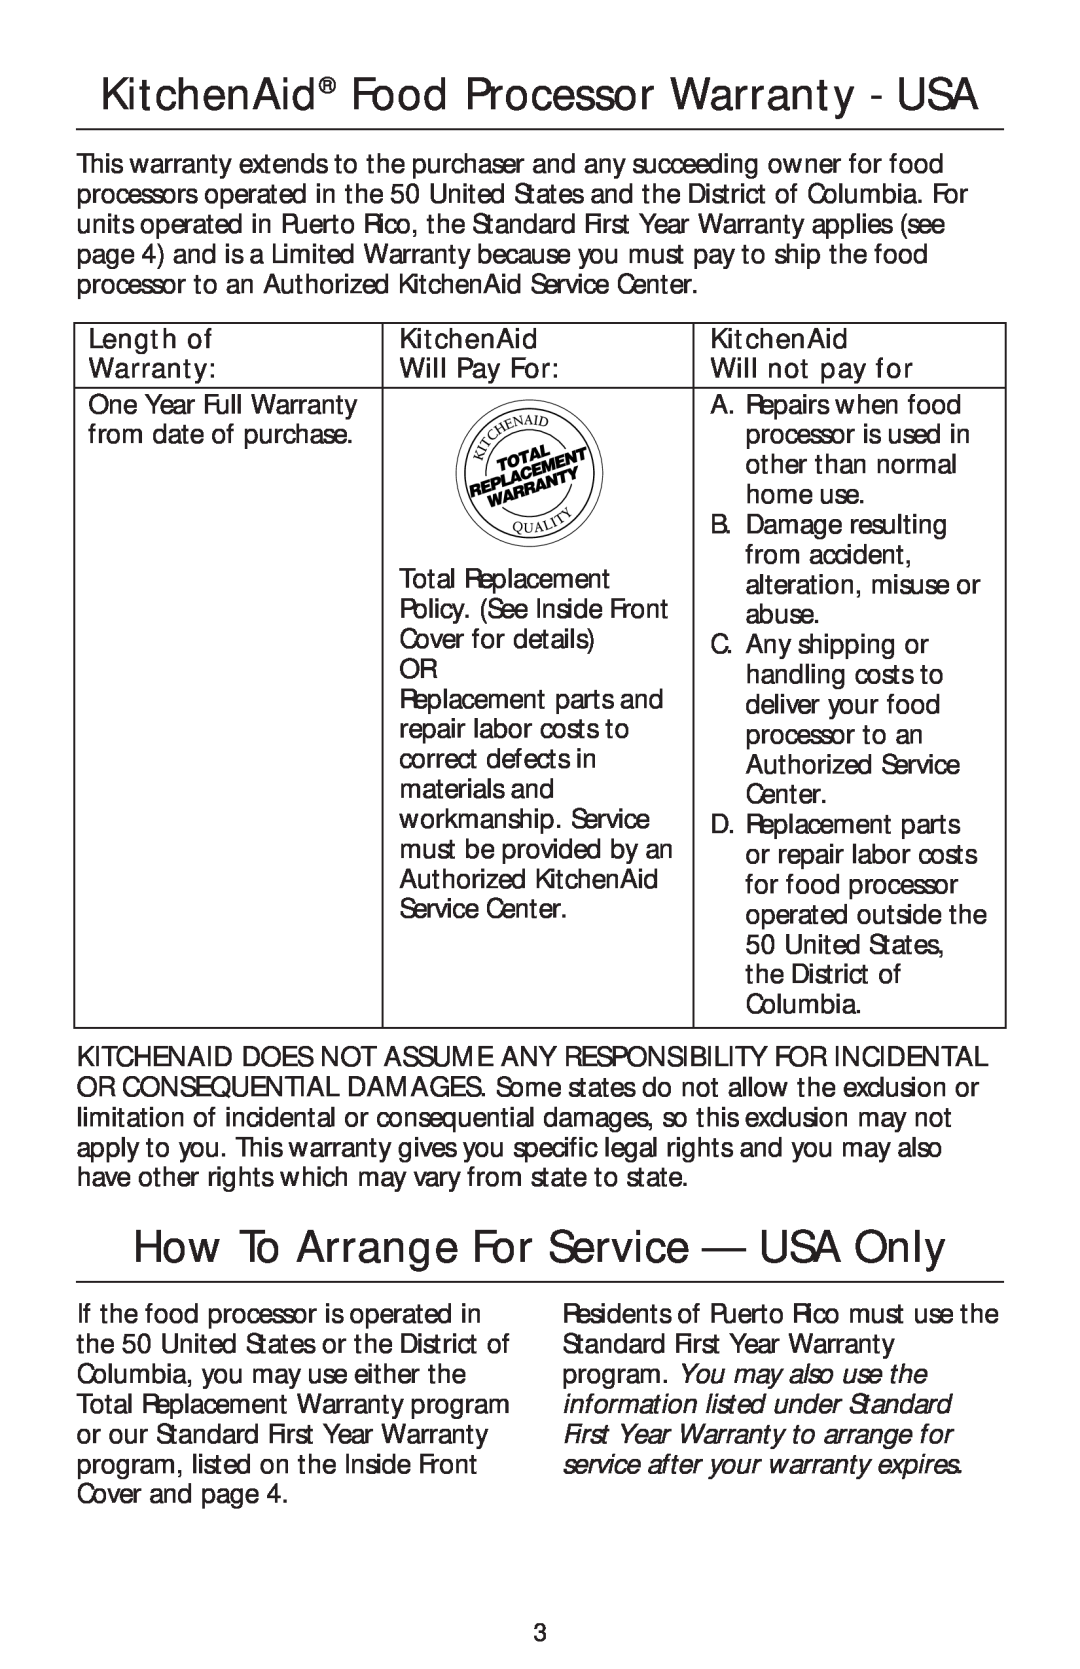 Kenmore KFPCJ, KFPSL6 KitchenAid Food Processor Warranty - USA, How To Arrange For Service - USA Only, Length of Warranty 